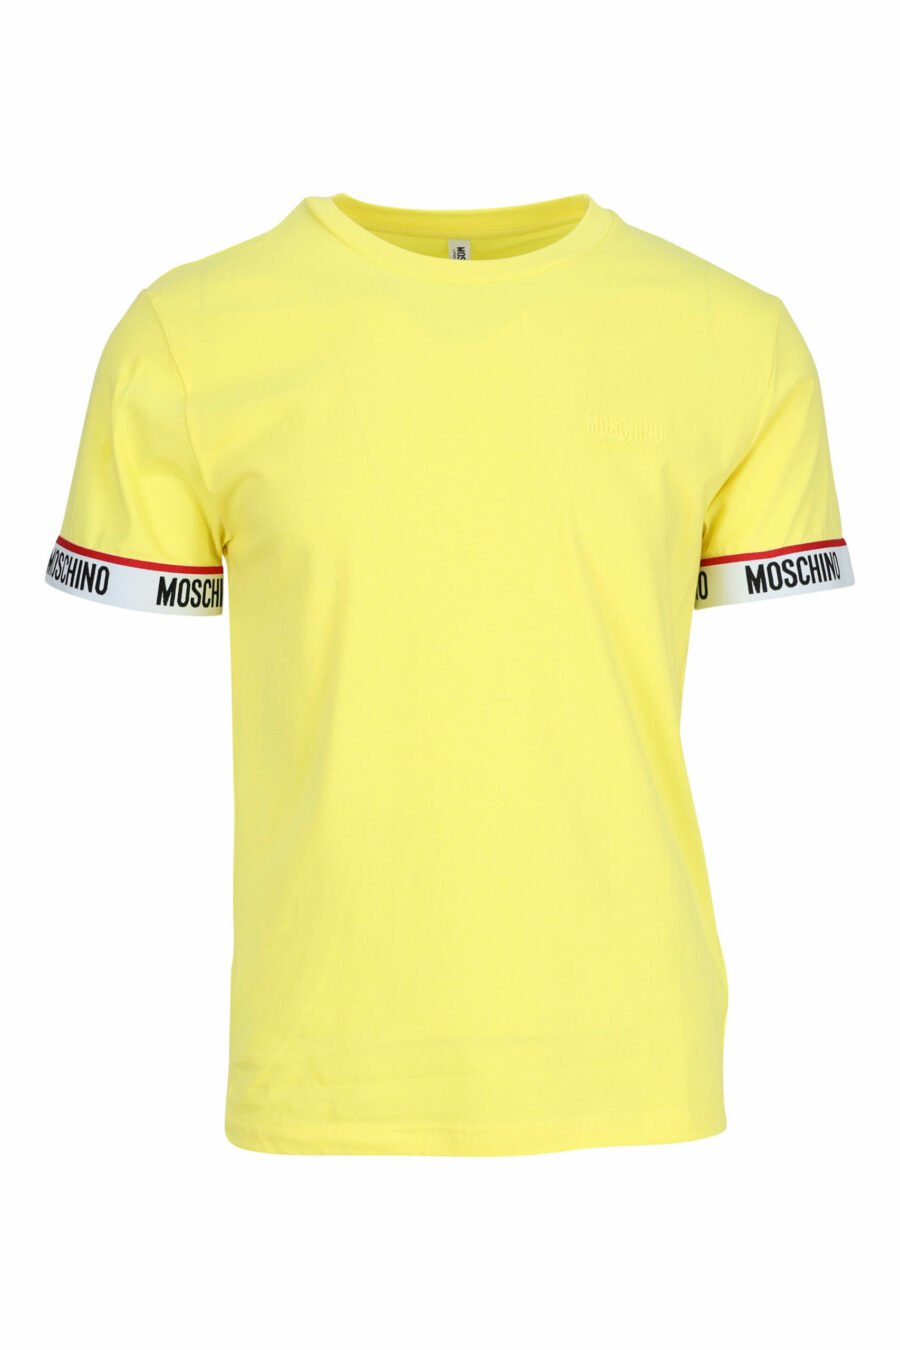 Camiseta amarilla con logo blanco en mangas - 667113604671 scaled